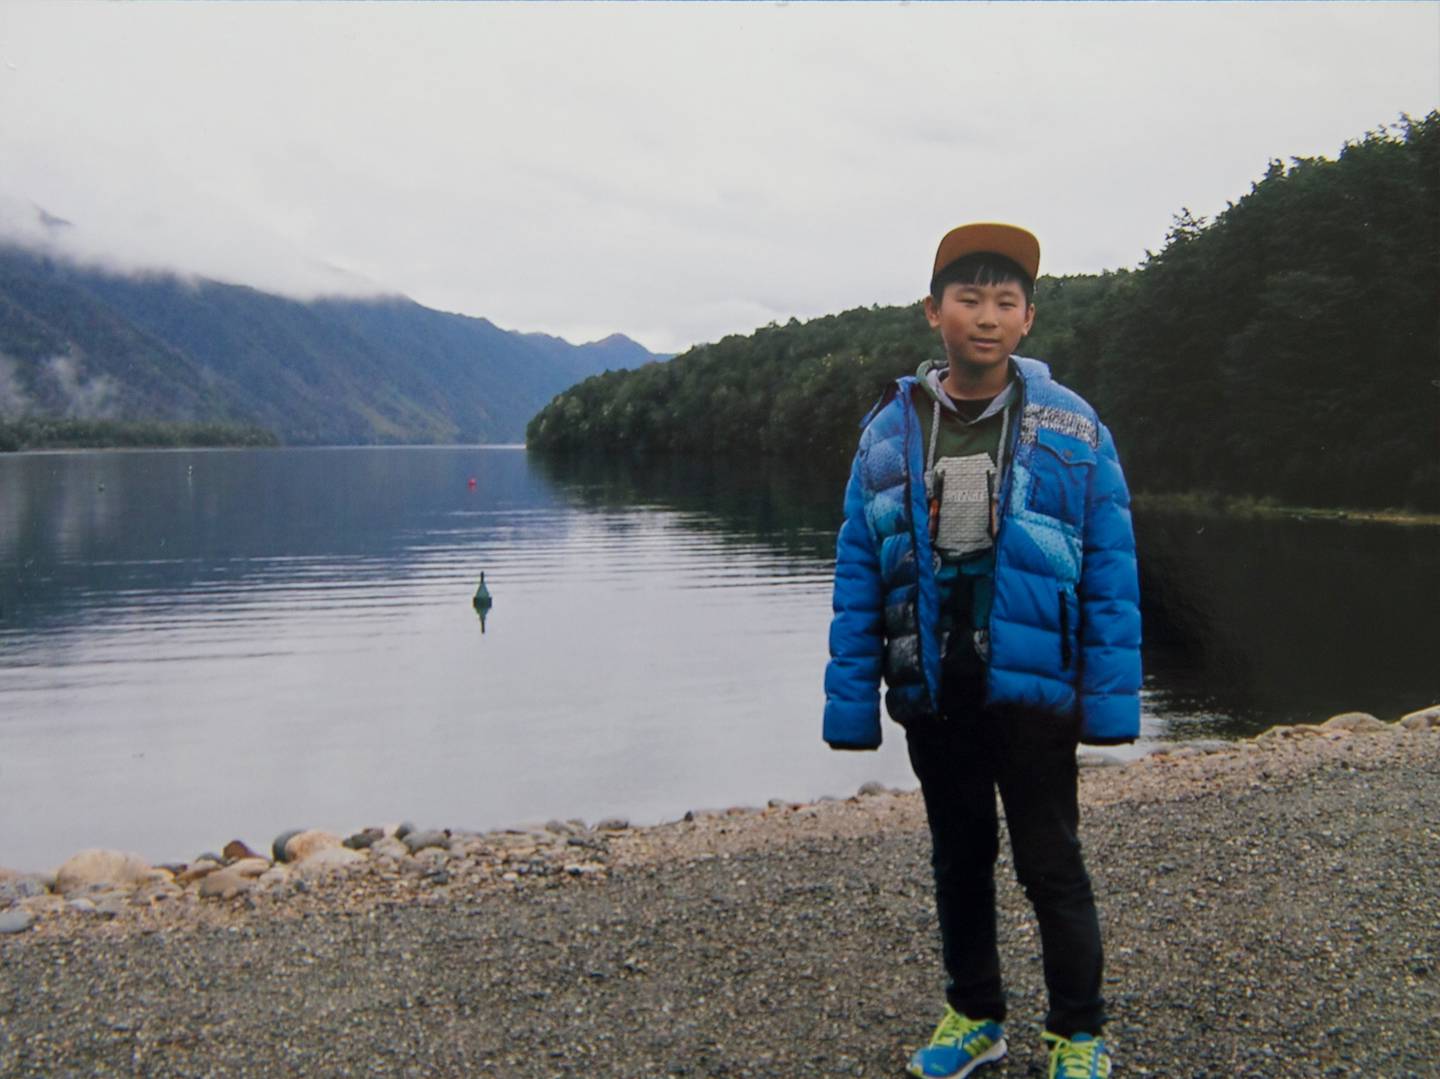 Mike Zhao-Beckenridge 于 2015 年 3 月与他的继父一起失踪。照片/提供